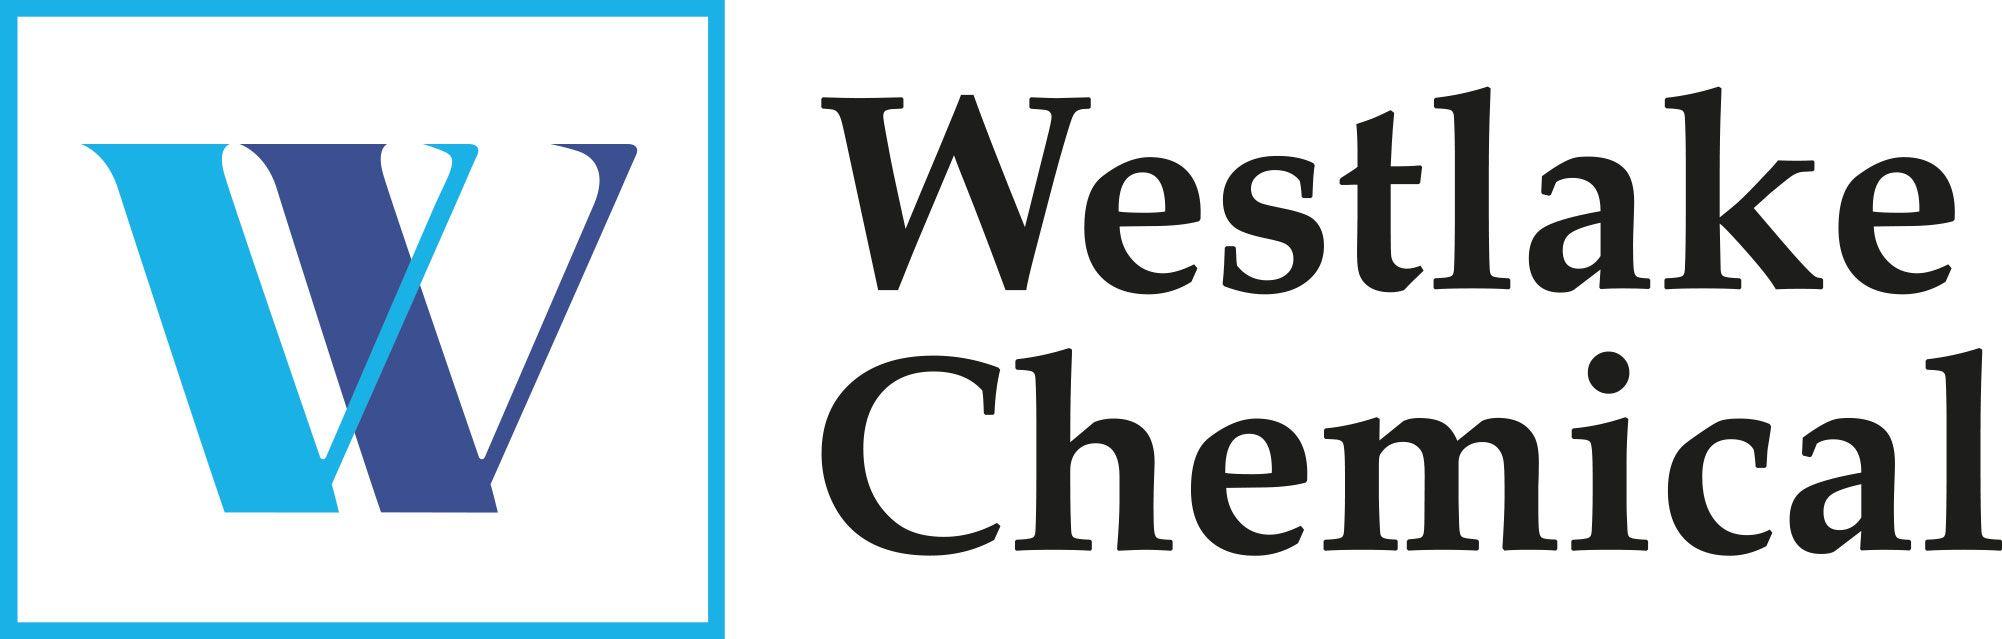 Westlake Logo - logo-westlake – Nakan compounds PVC